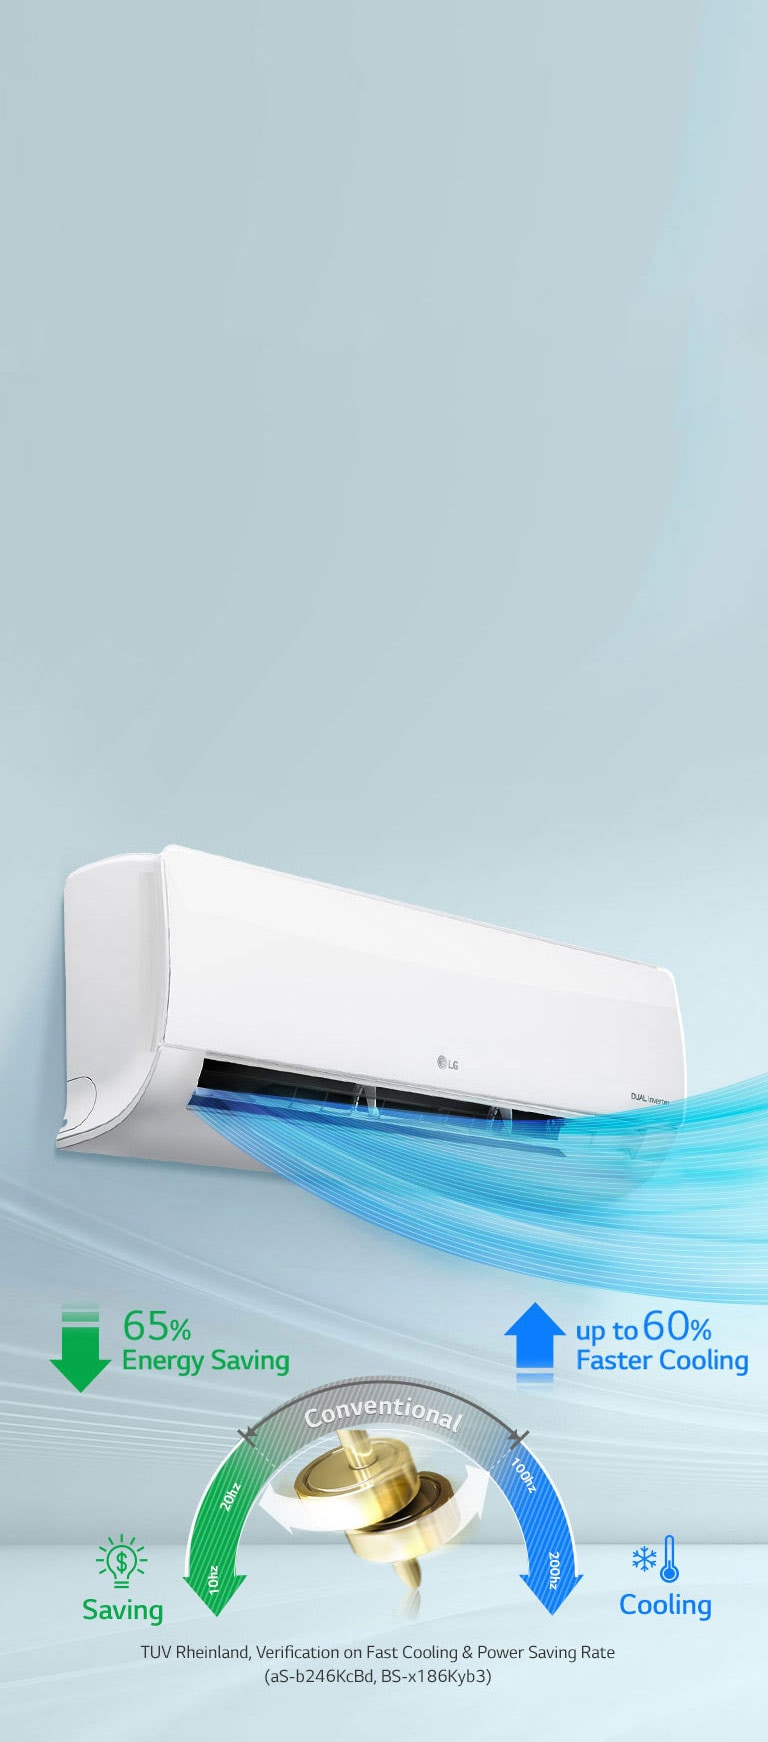 LG DUALCOOL Inverter AC 2 Ton, 65°Operation, 65% Energy Saving, 60% ...